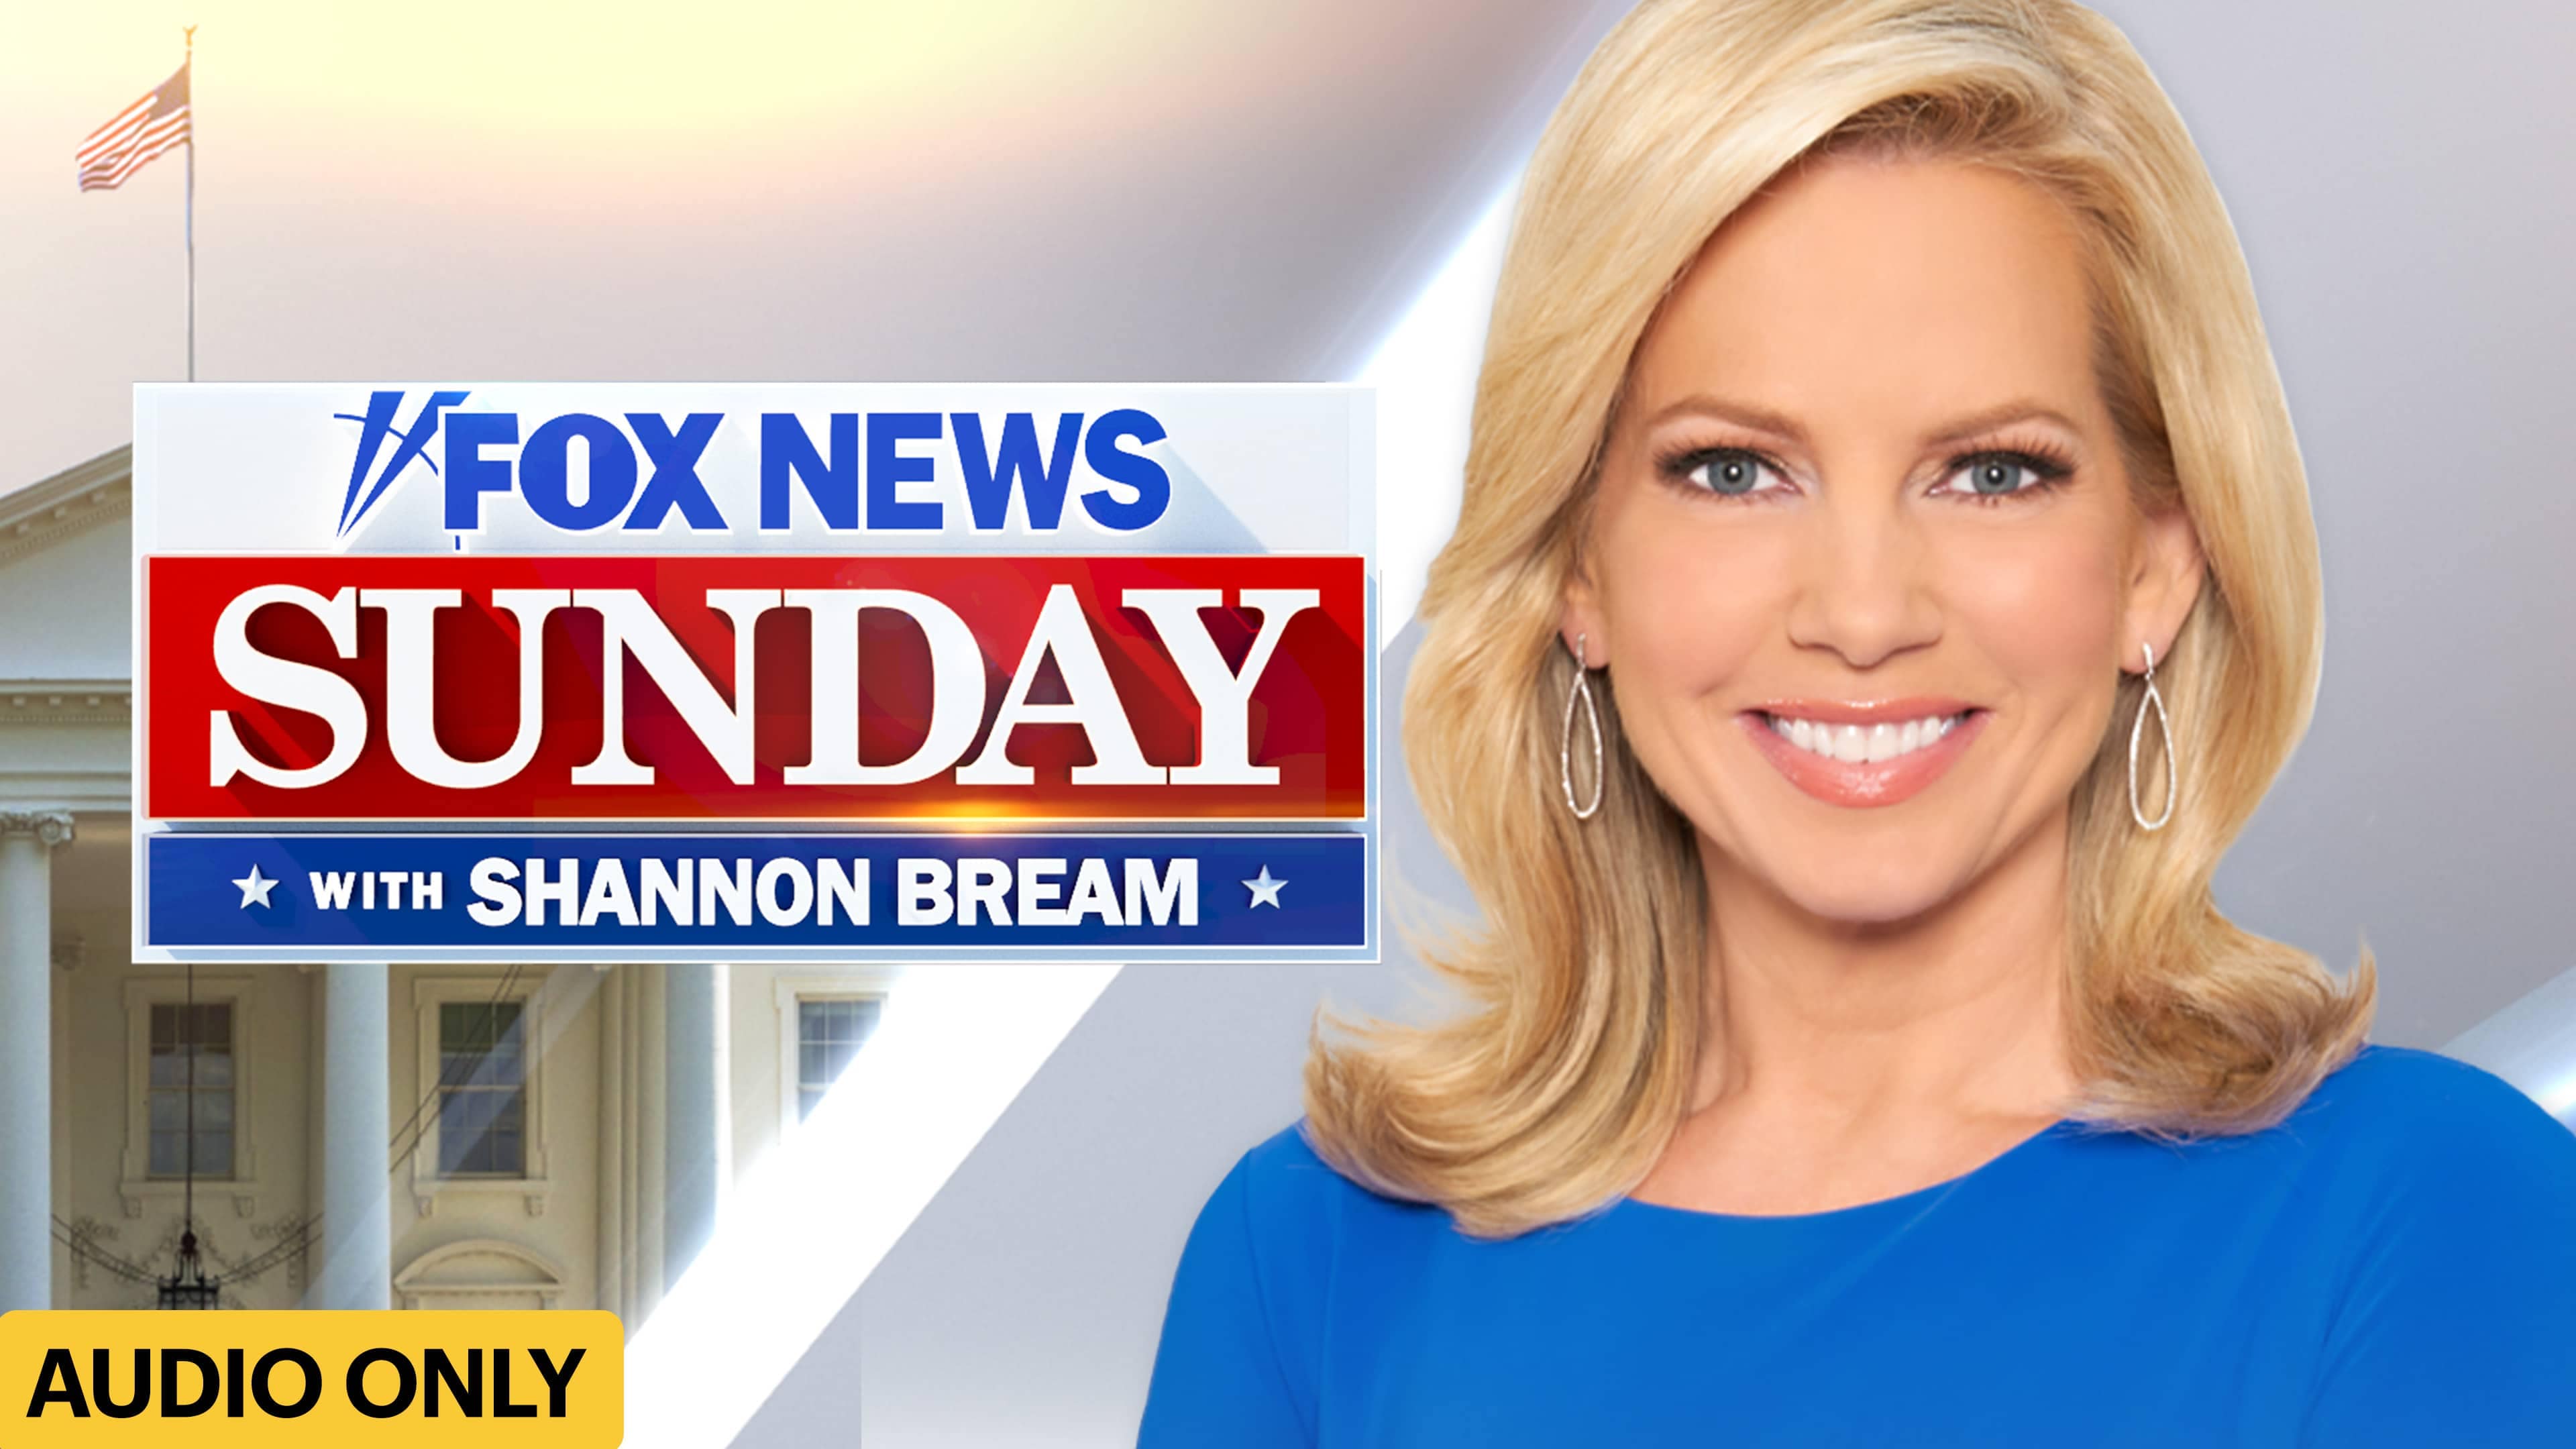 FOX News Sunday